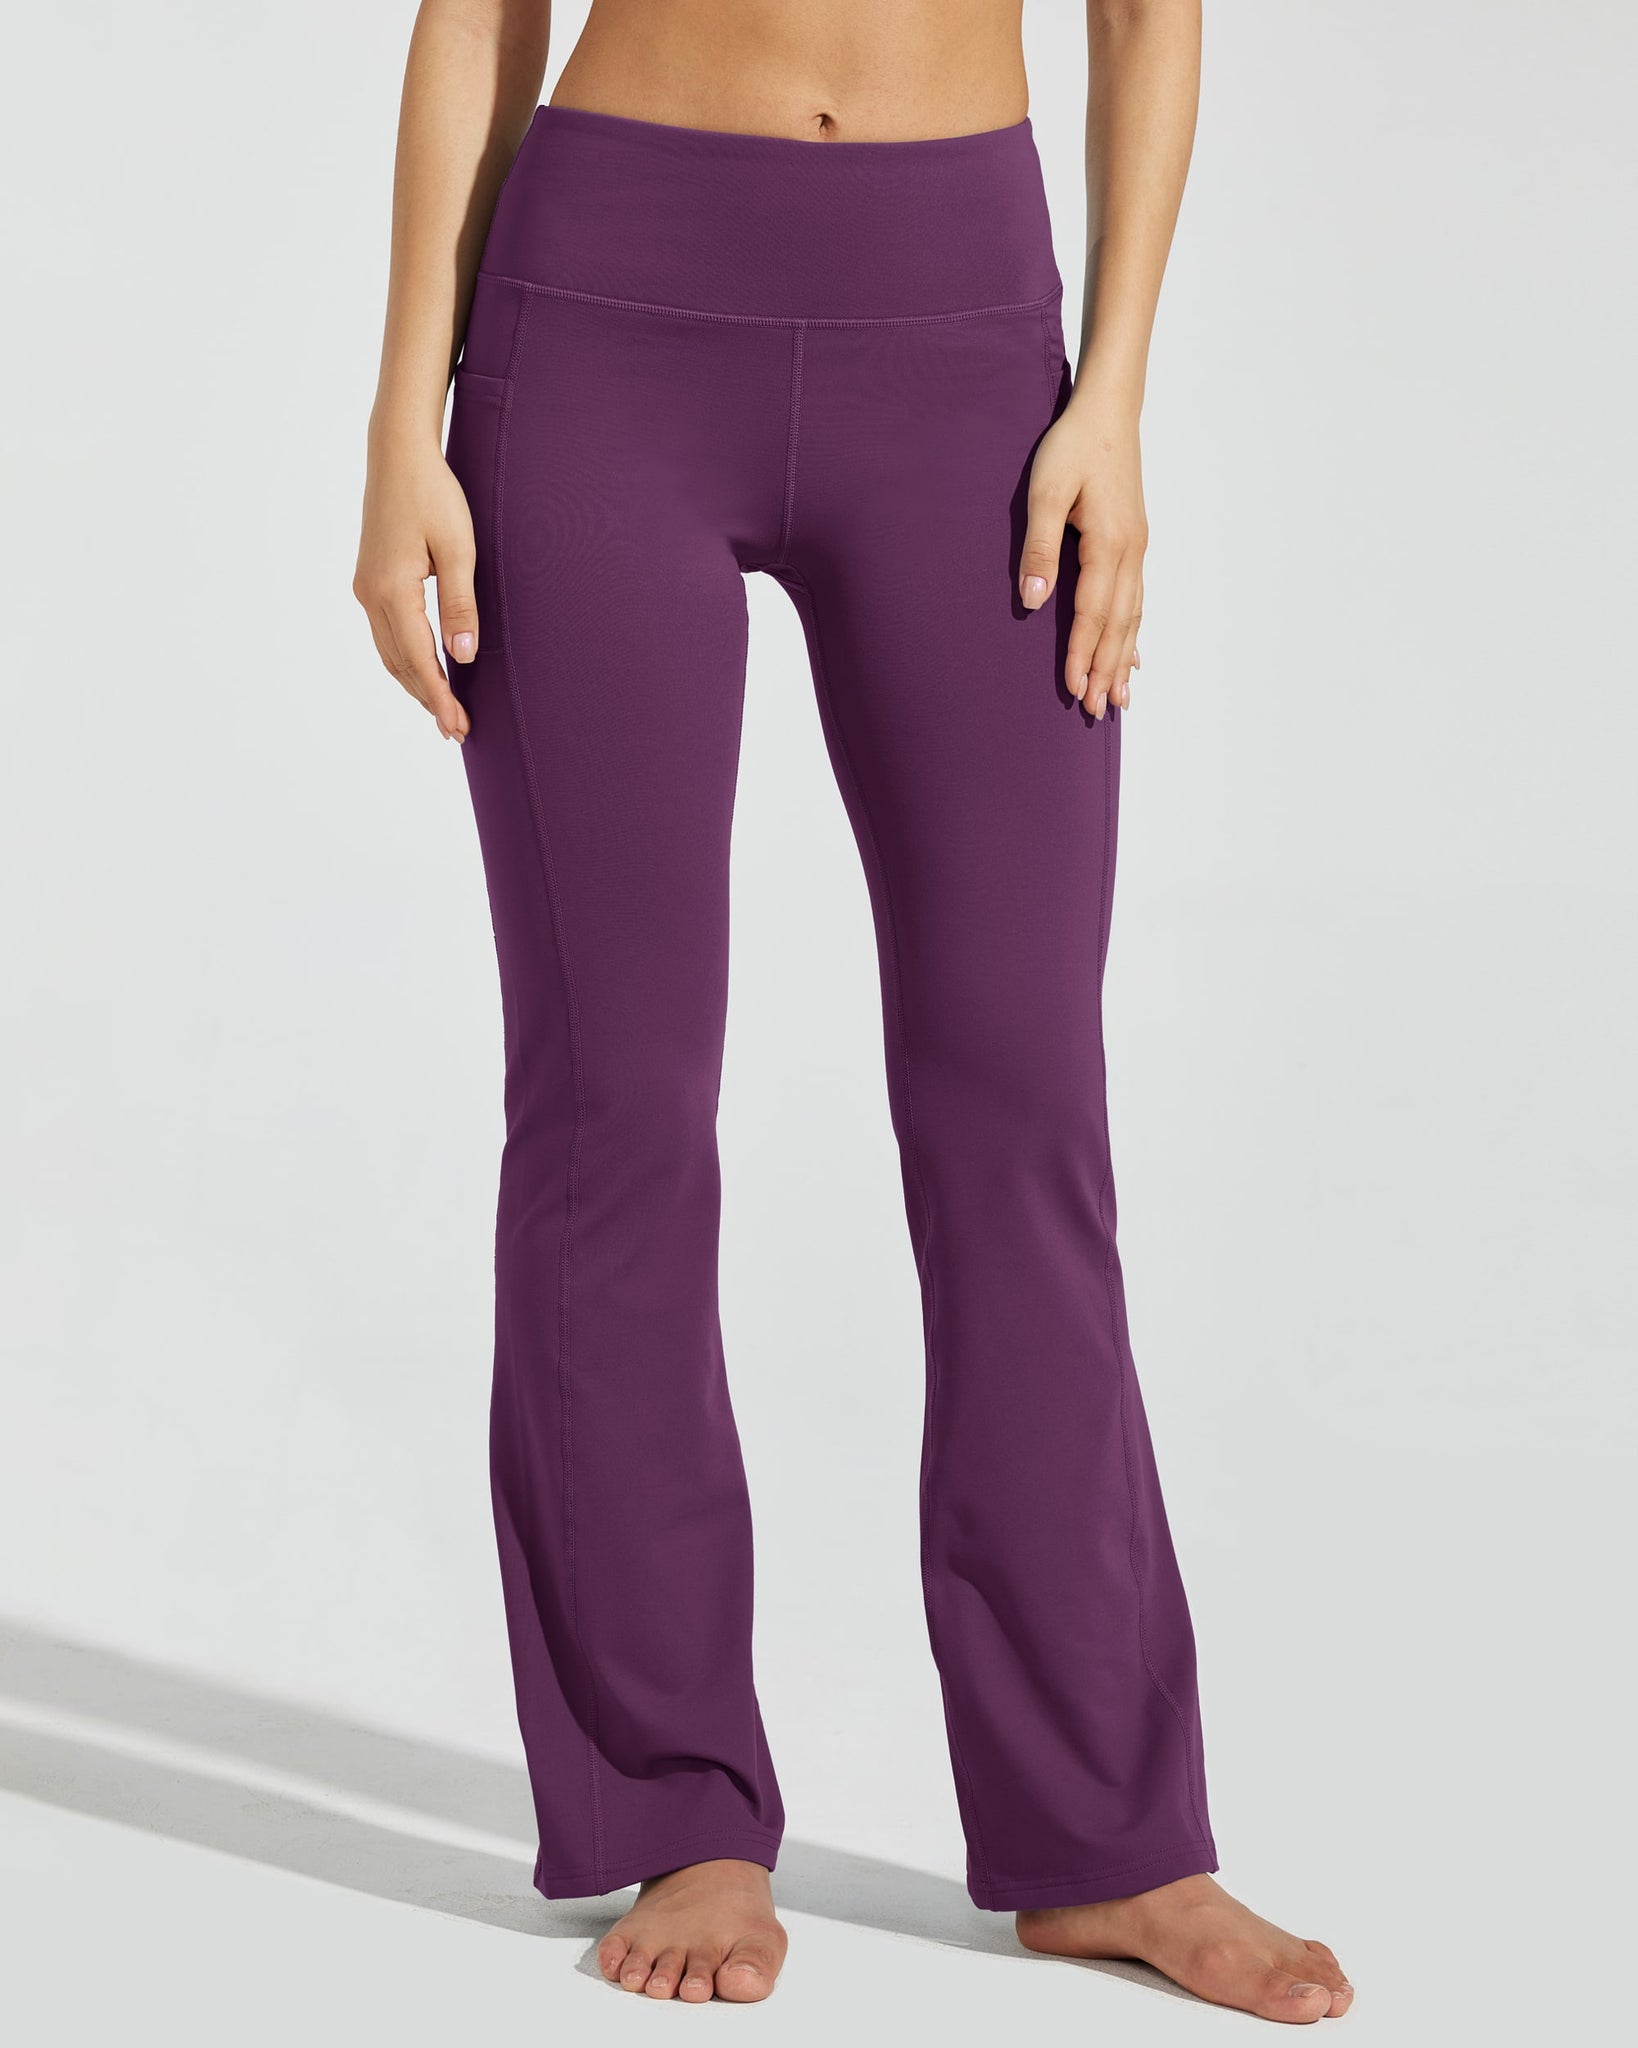 Women's Fleece Lined Bootcut Yoga Pants_Purple_model1